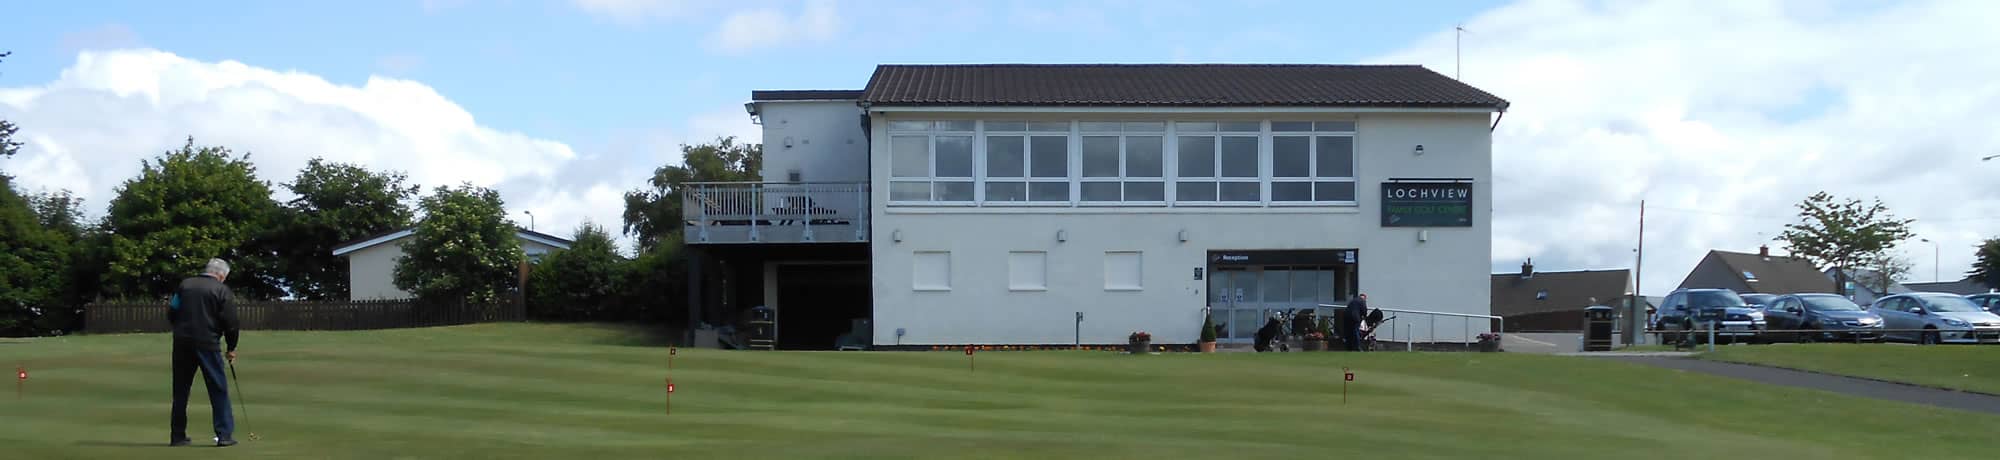 Lochview Family Golf Centre Building